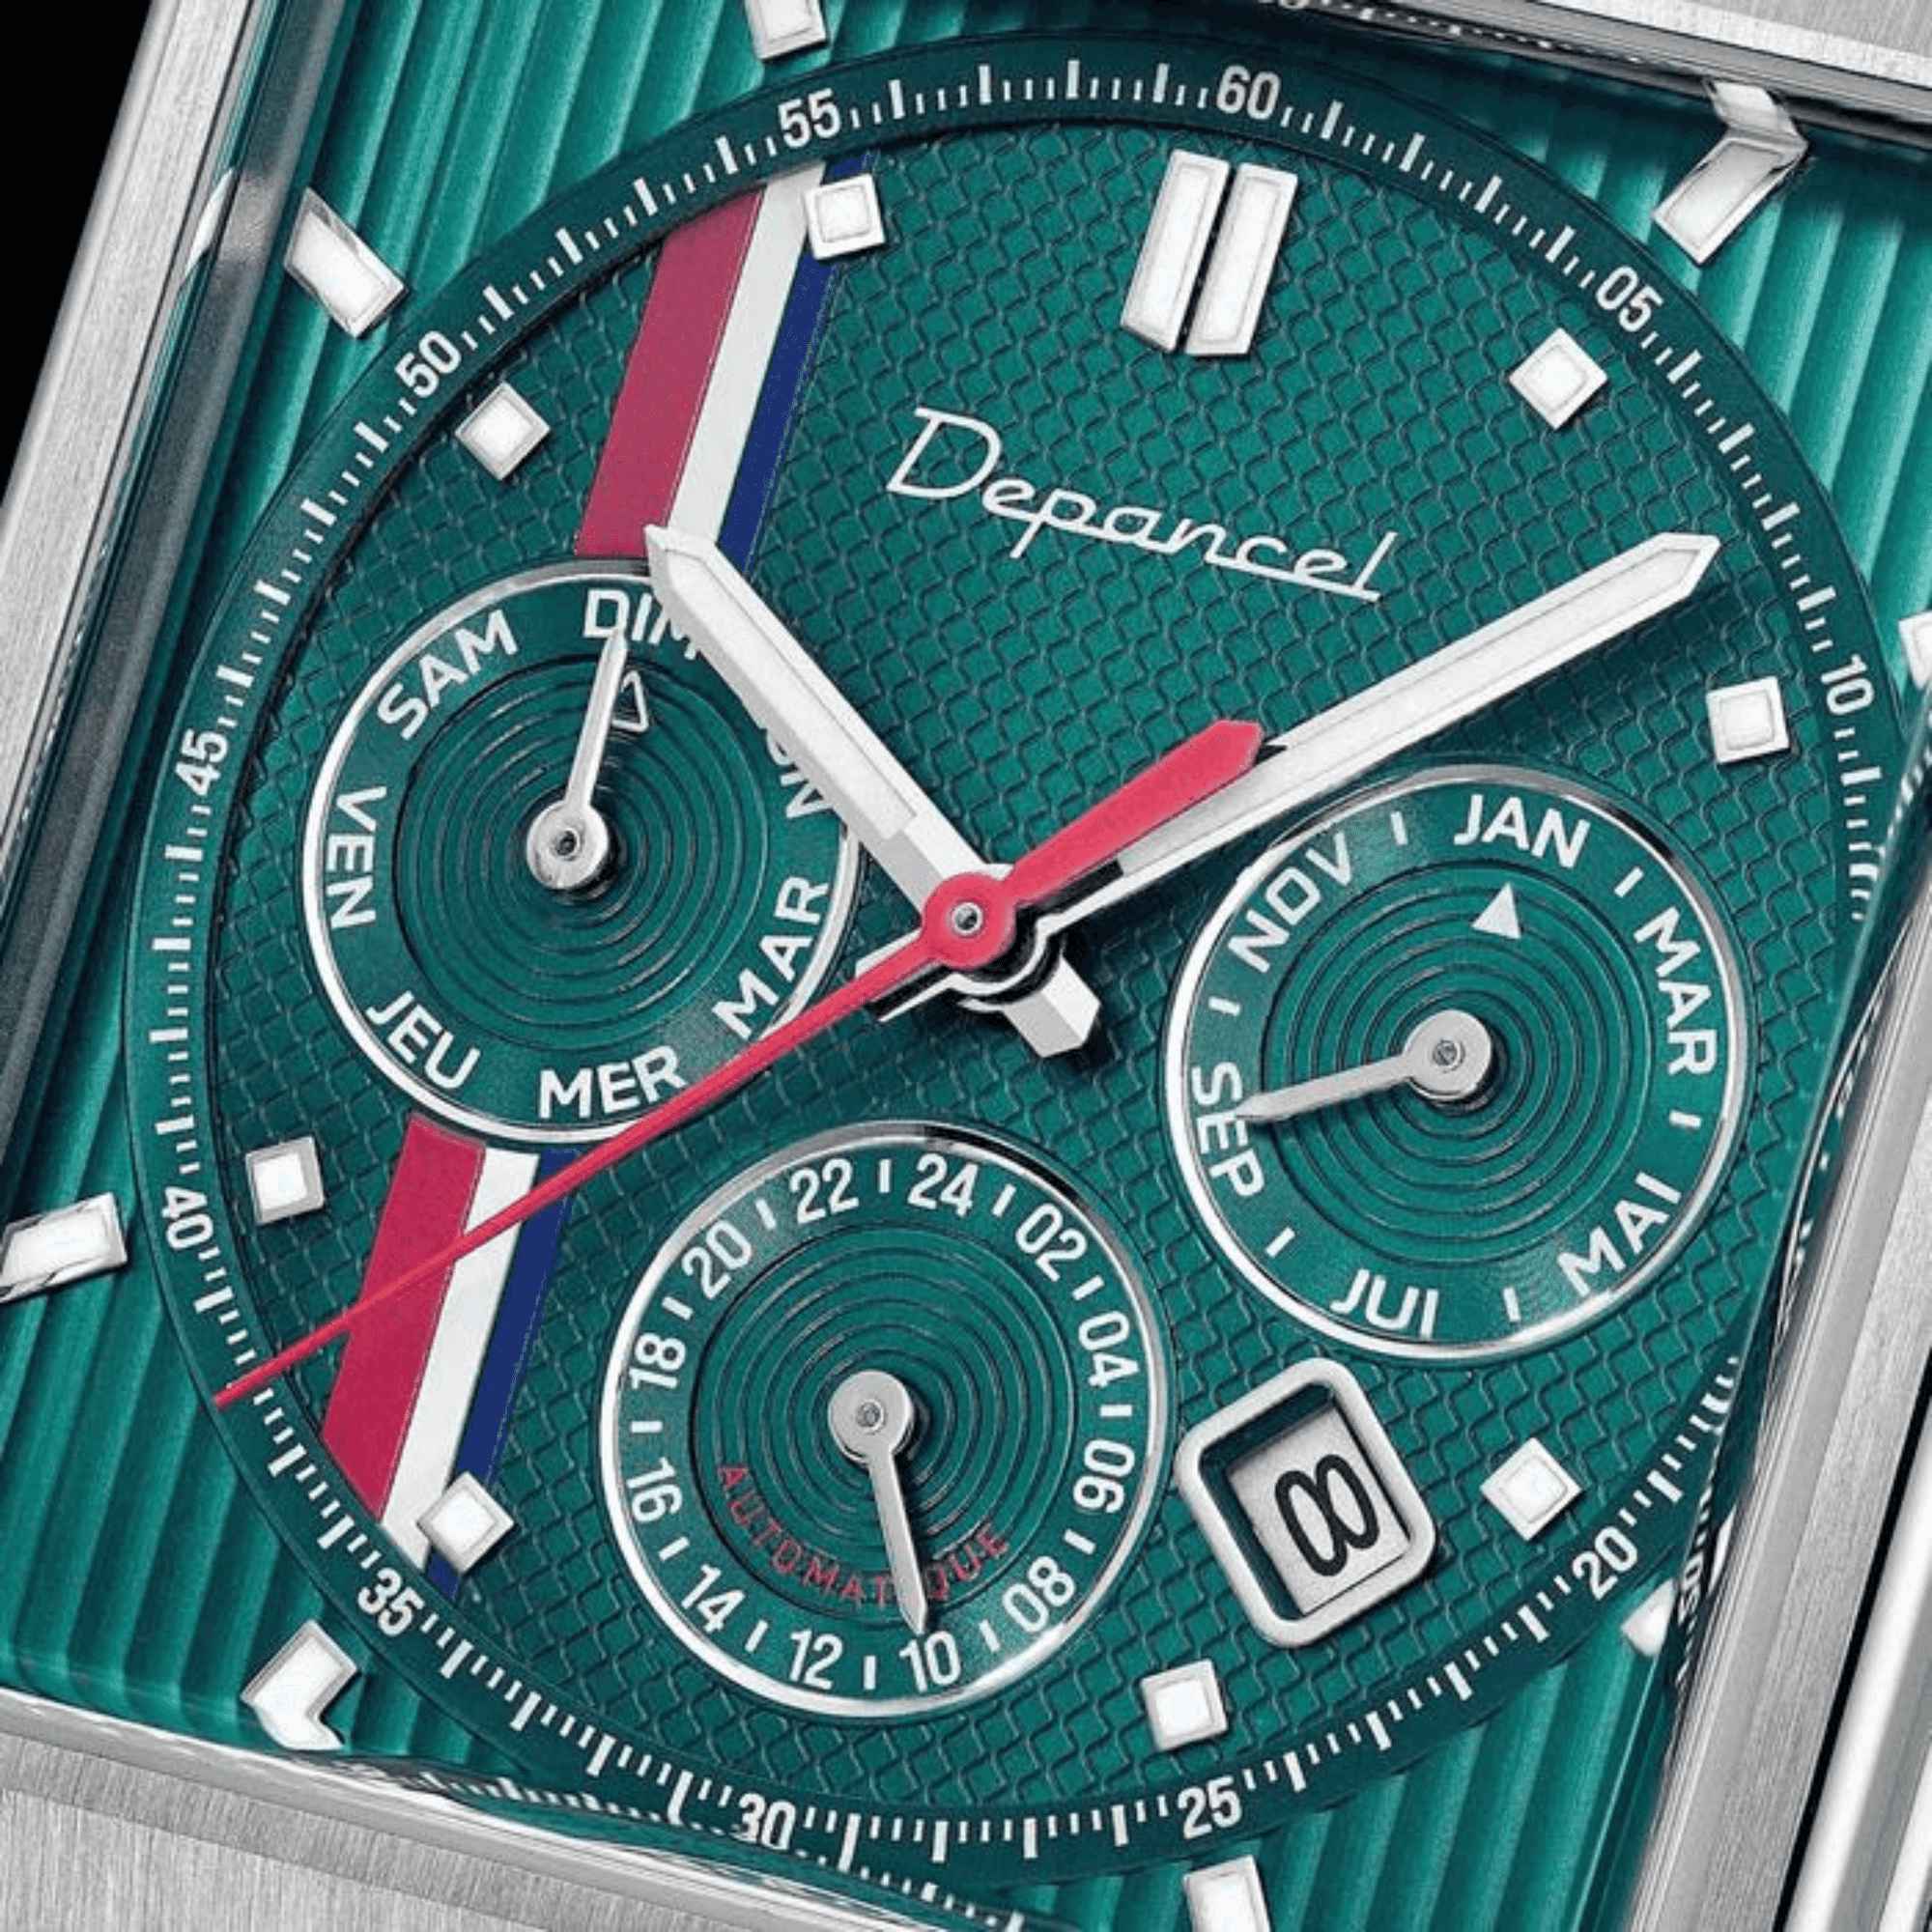 Depancel | Serie-R F-Back Metallic Green-Watch-Depancel-gpx-store